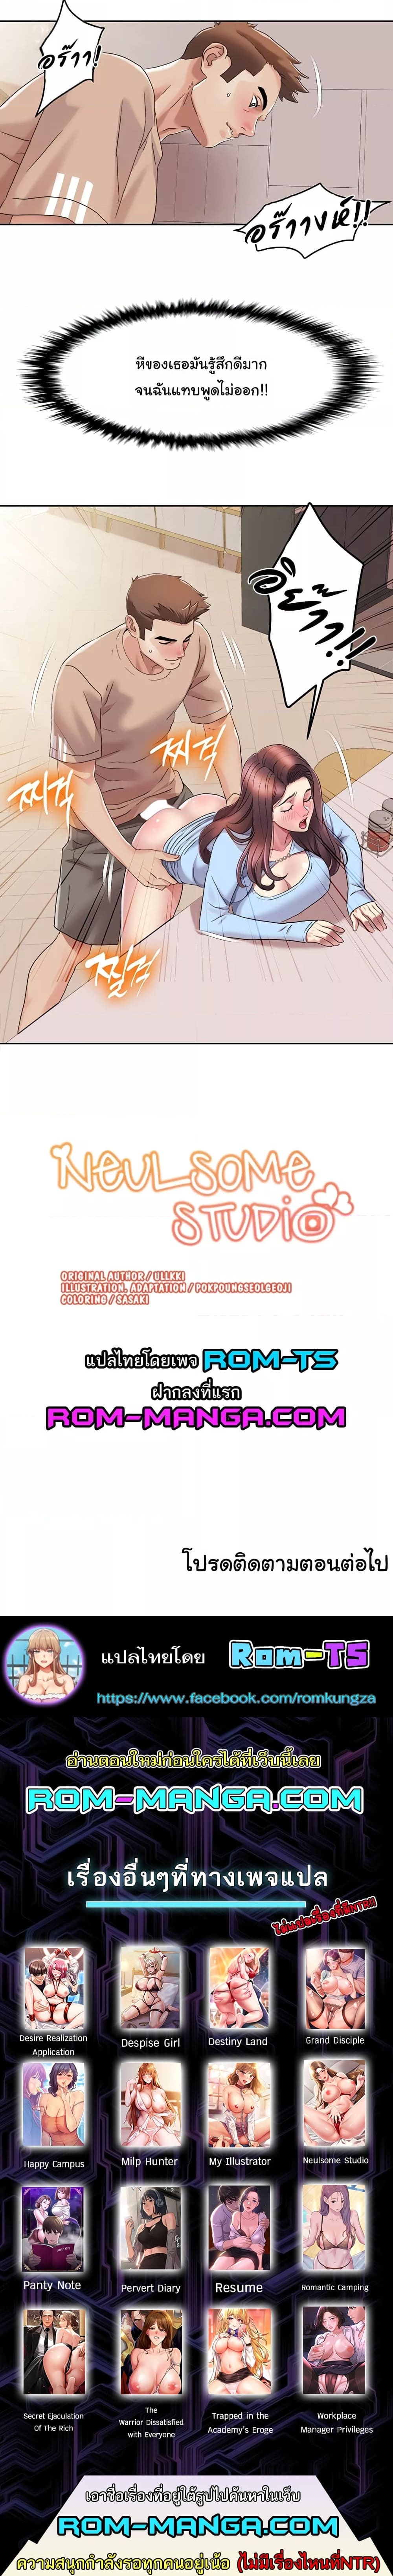 Neulsome Studio 21 (4)